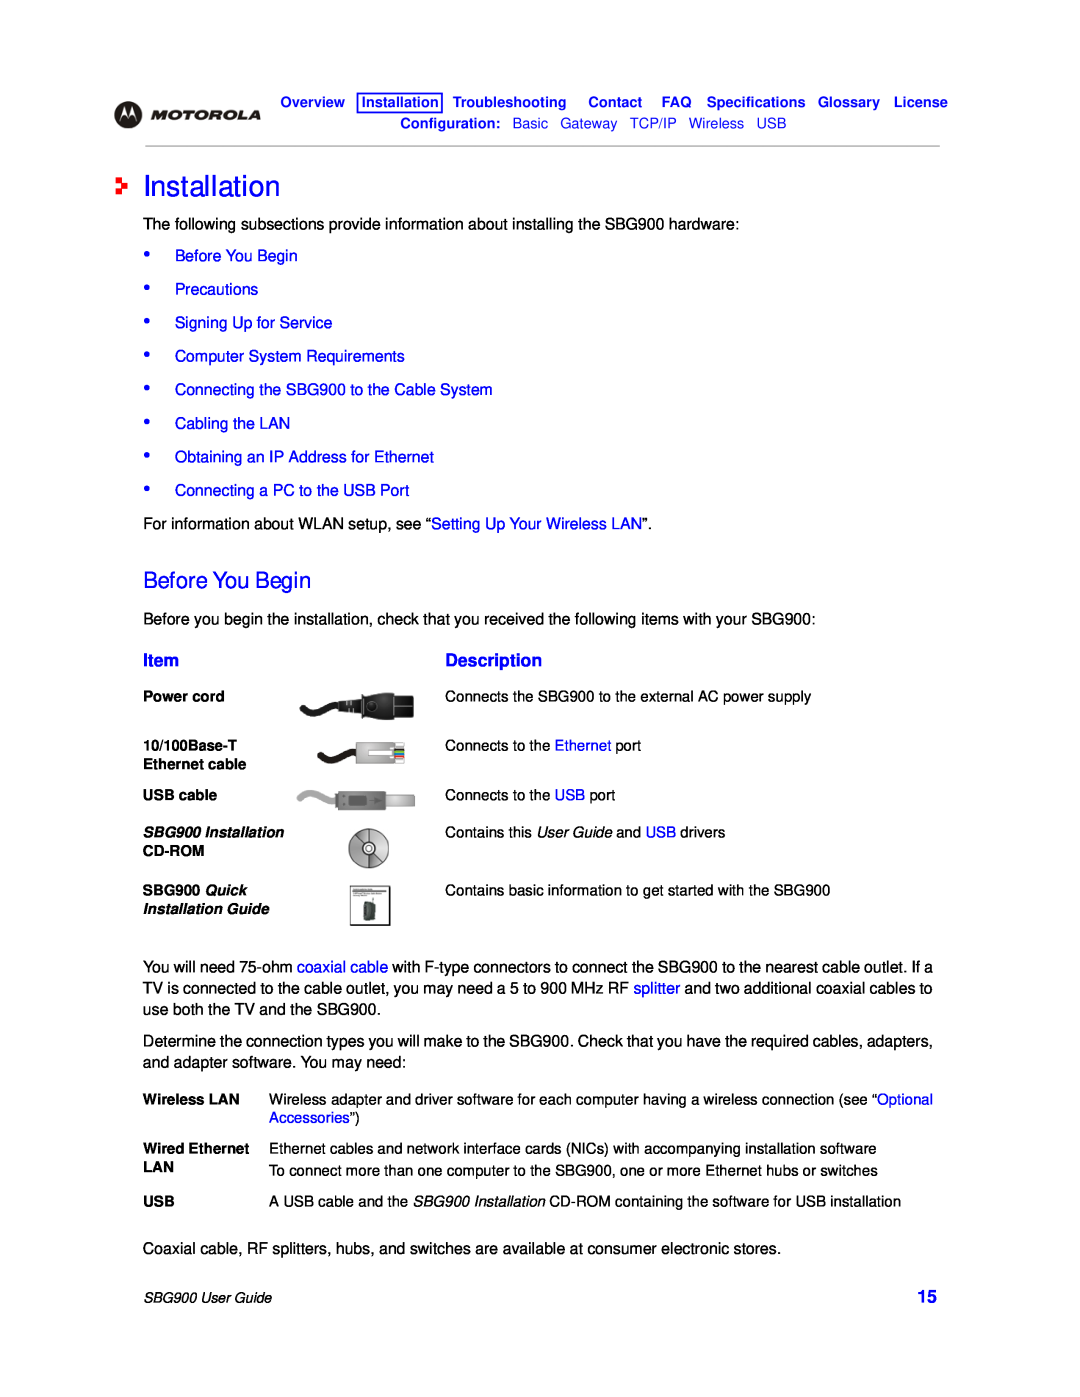 Motorola SBG900 manual Installation, Description, Before You Begin Precautions Signing Up for Service 